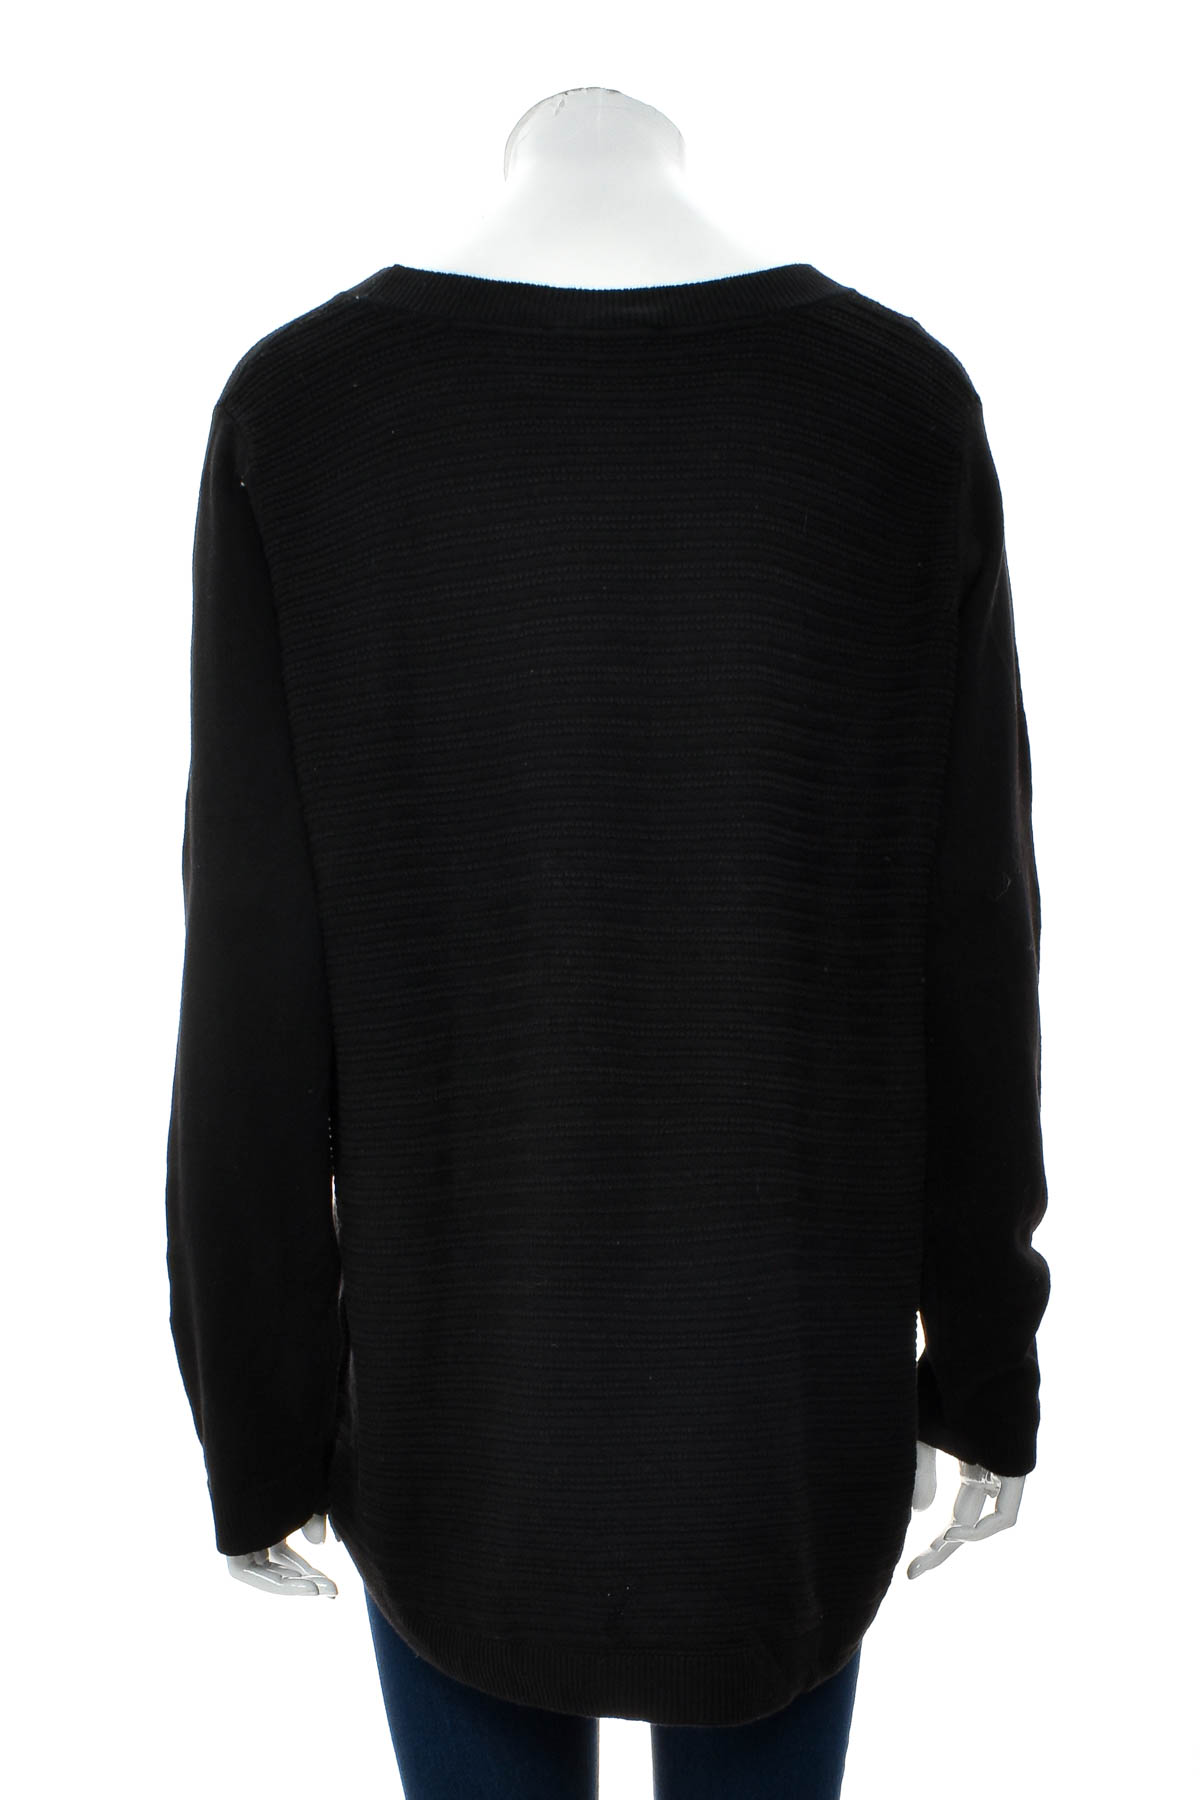 Дамски пуловер - Hilary Radley - 1